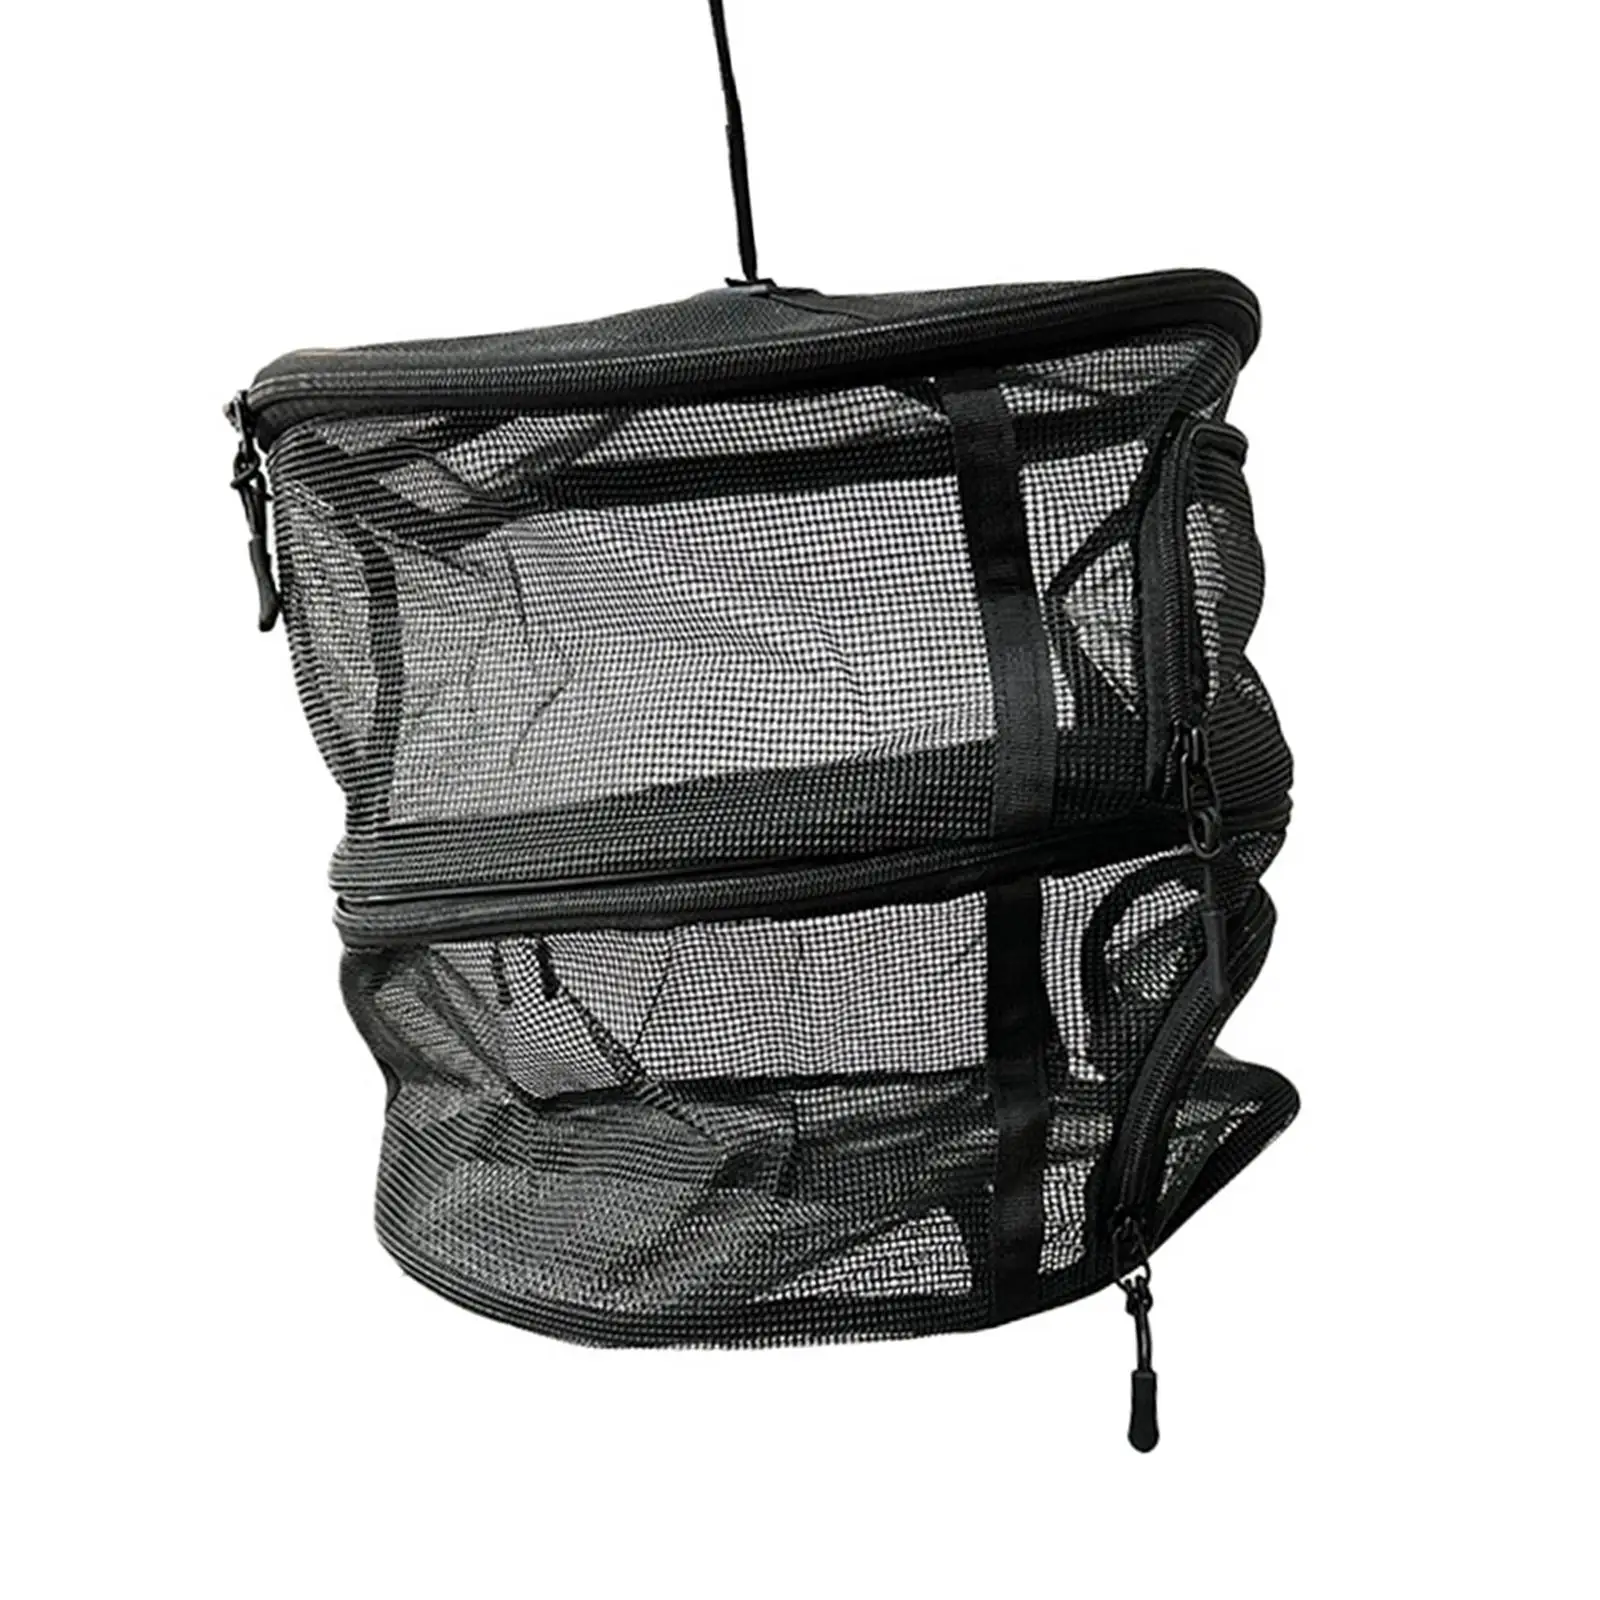 Drying Net Dryer Bag Breathable Lightweight 2 Tier Hanging Mesh Drying Rack